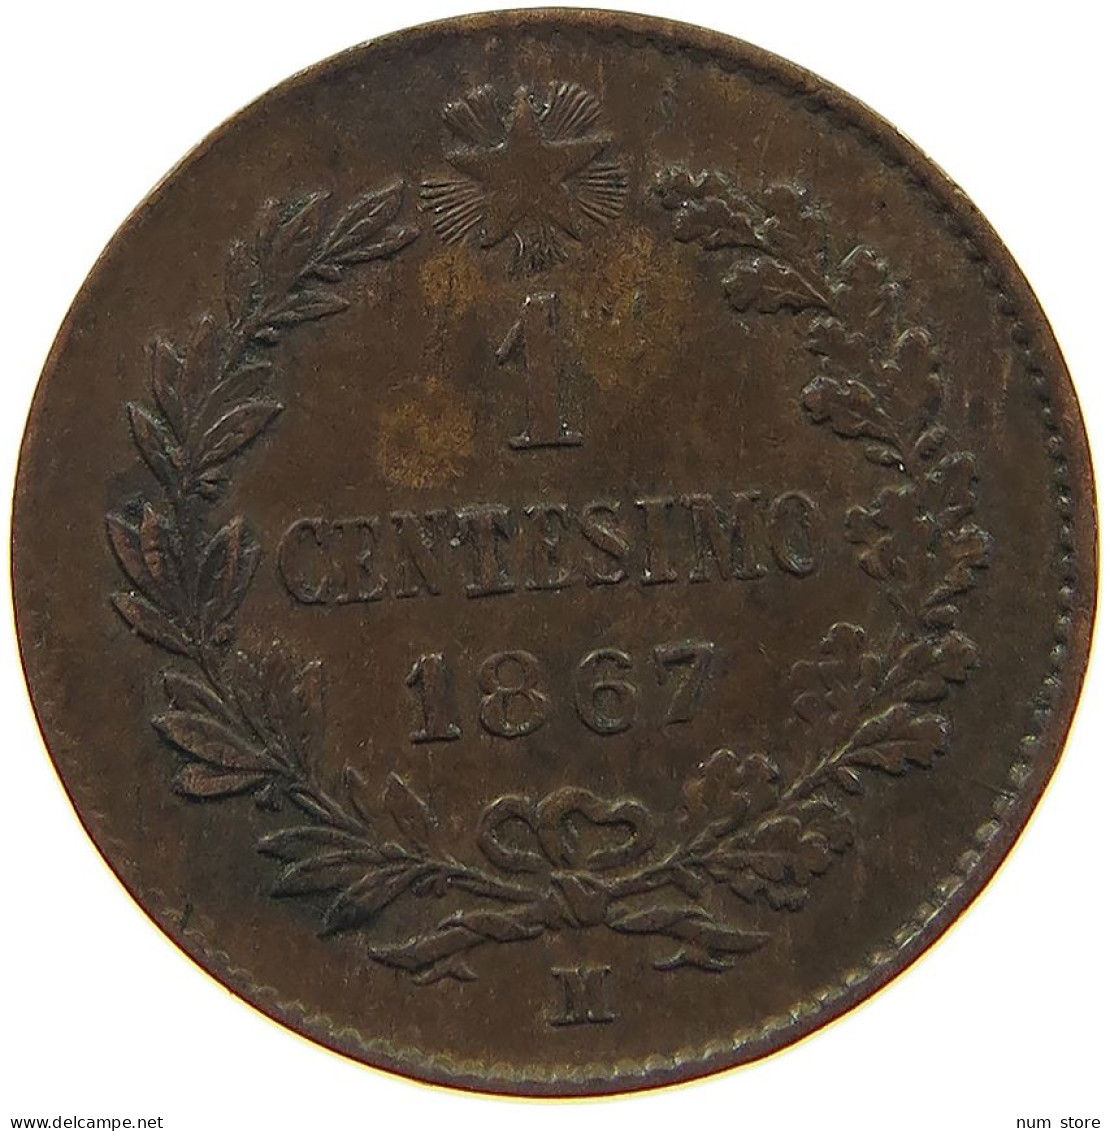 ITALY CENTESIMO 1867 M Vittorio Emanuele II. 1861 - 1878 #c017 0301 - 1861-1878 : Vittoro Emanuele II